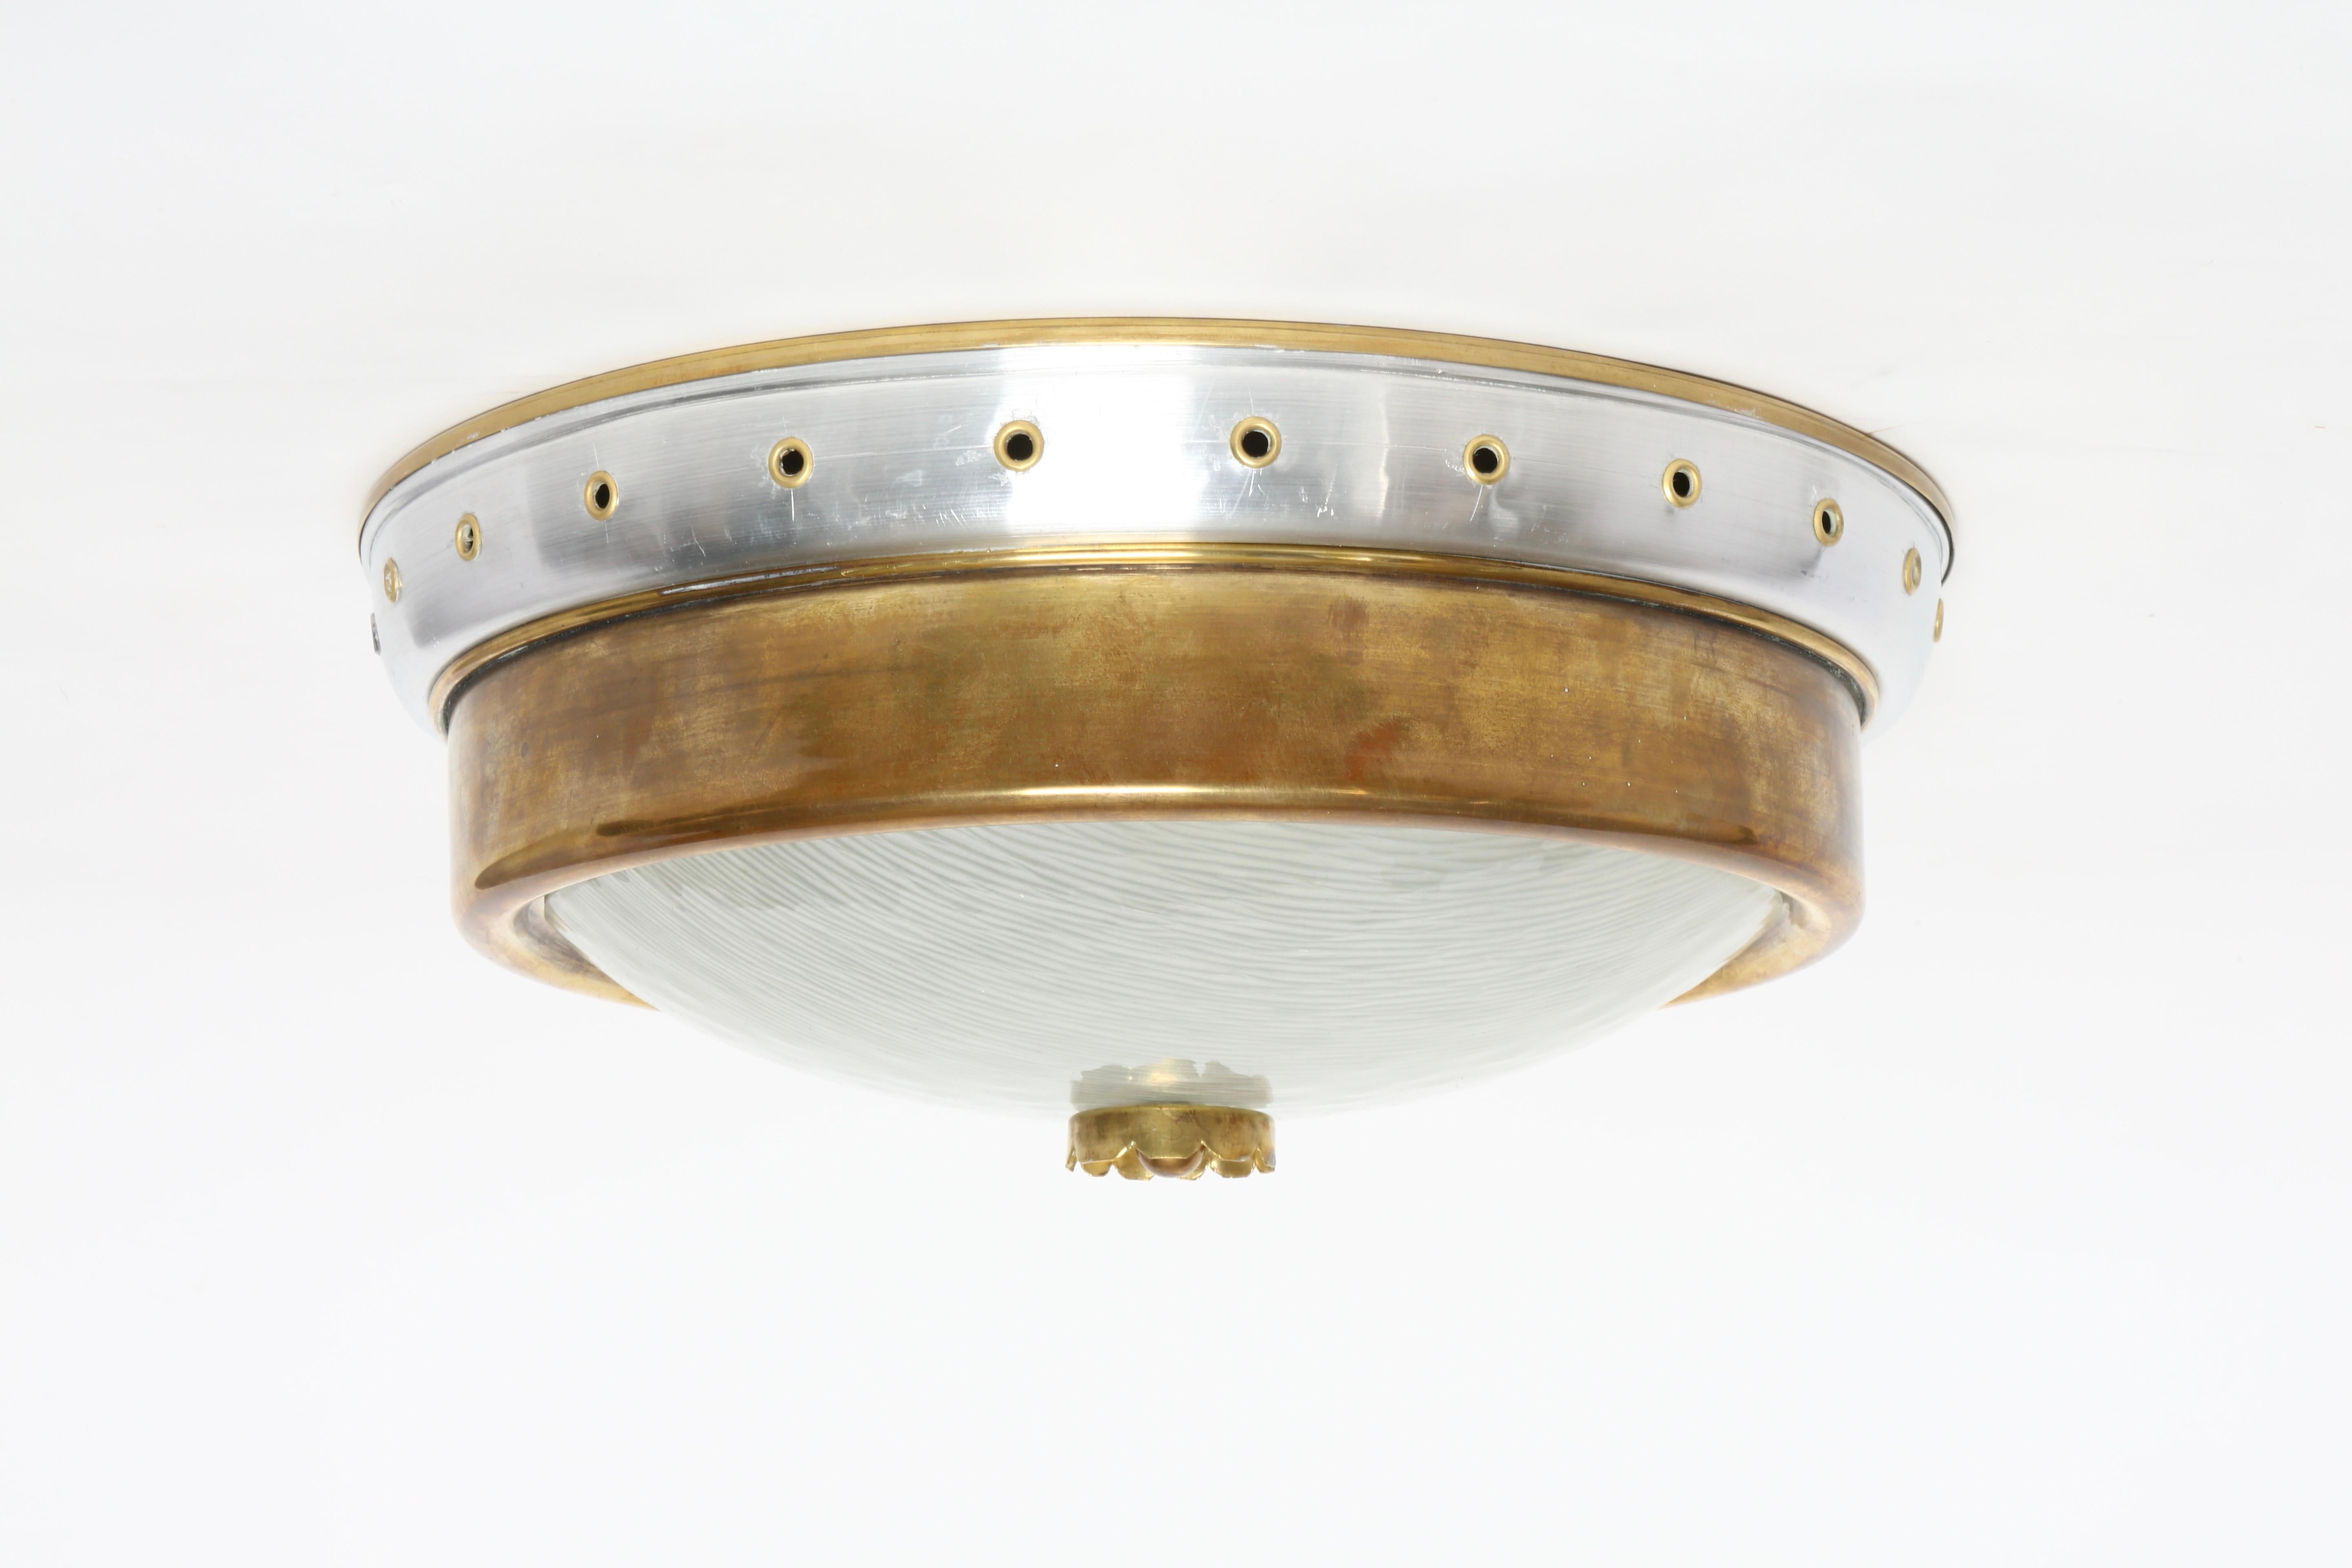 Glass Italian flush mount ceiling light, circa 1960s